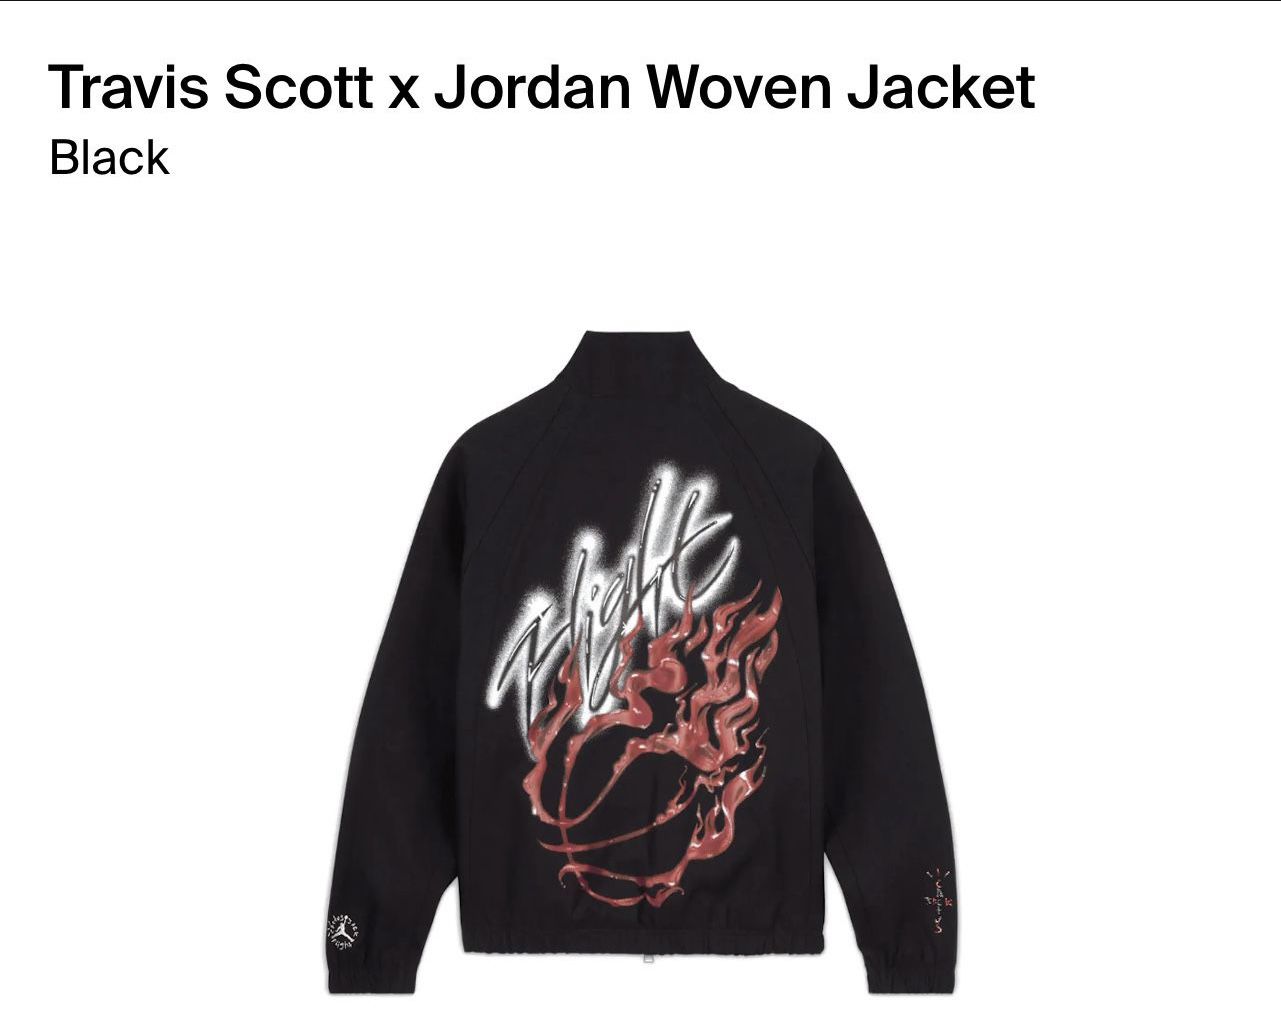 Travis Scott x Jordan Woven Jacket